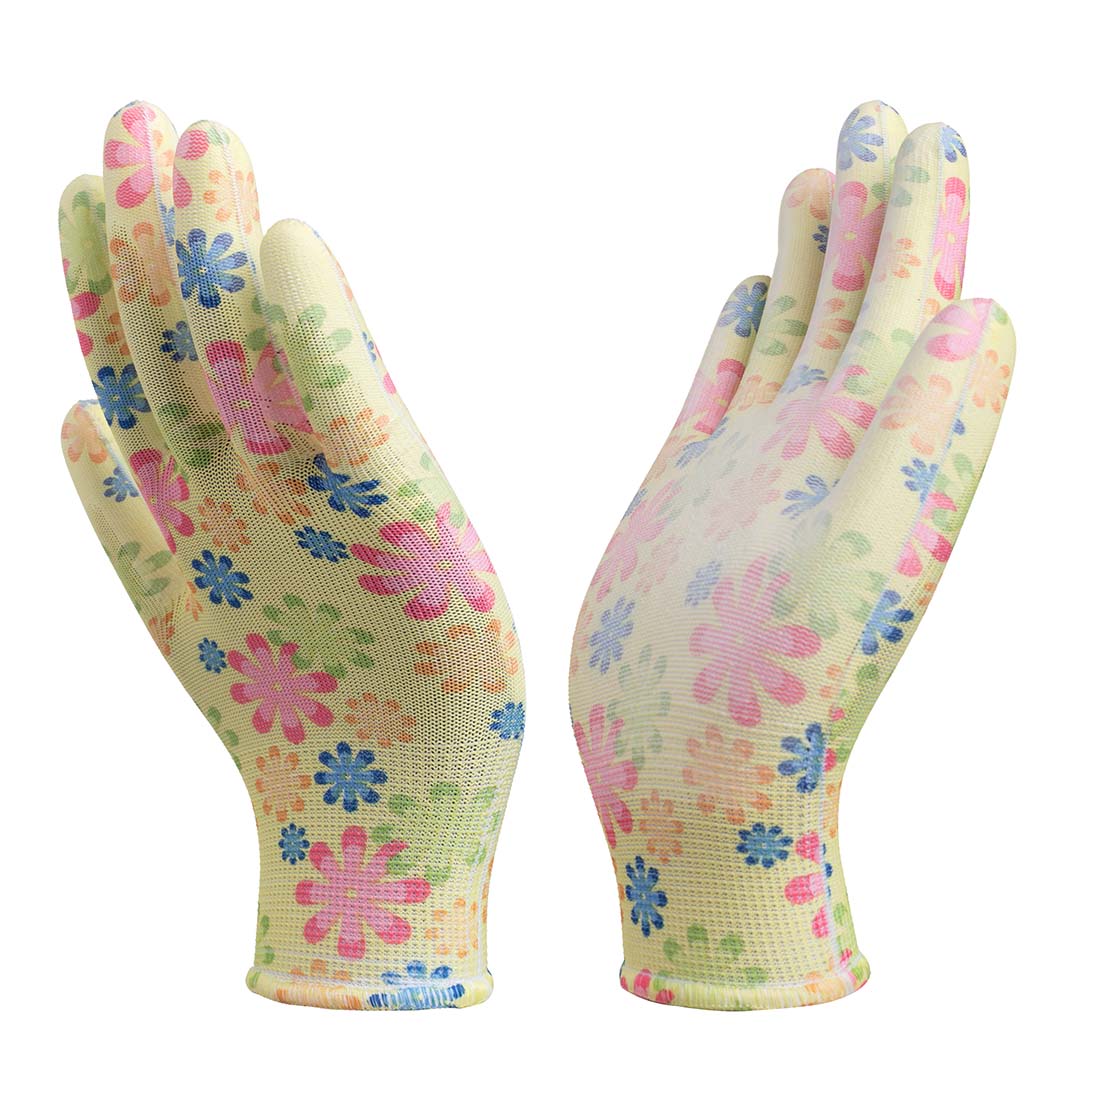 13G printed coated gloves | 13G coated gloves | Coated gloves